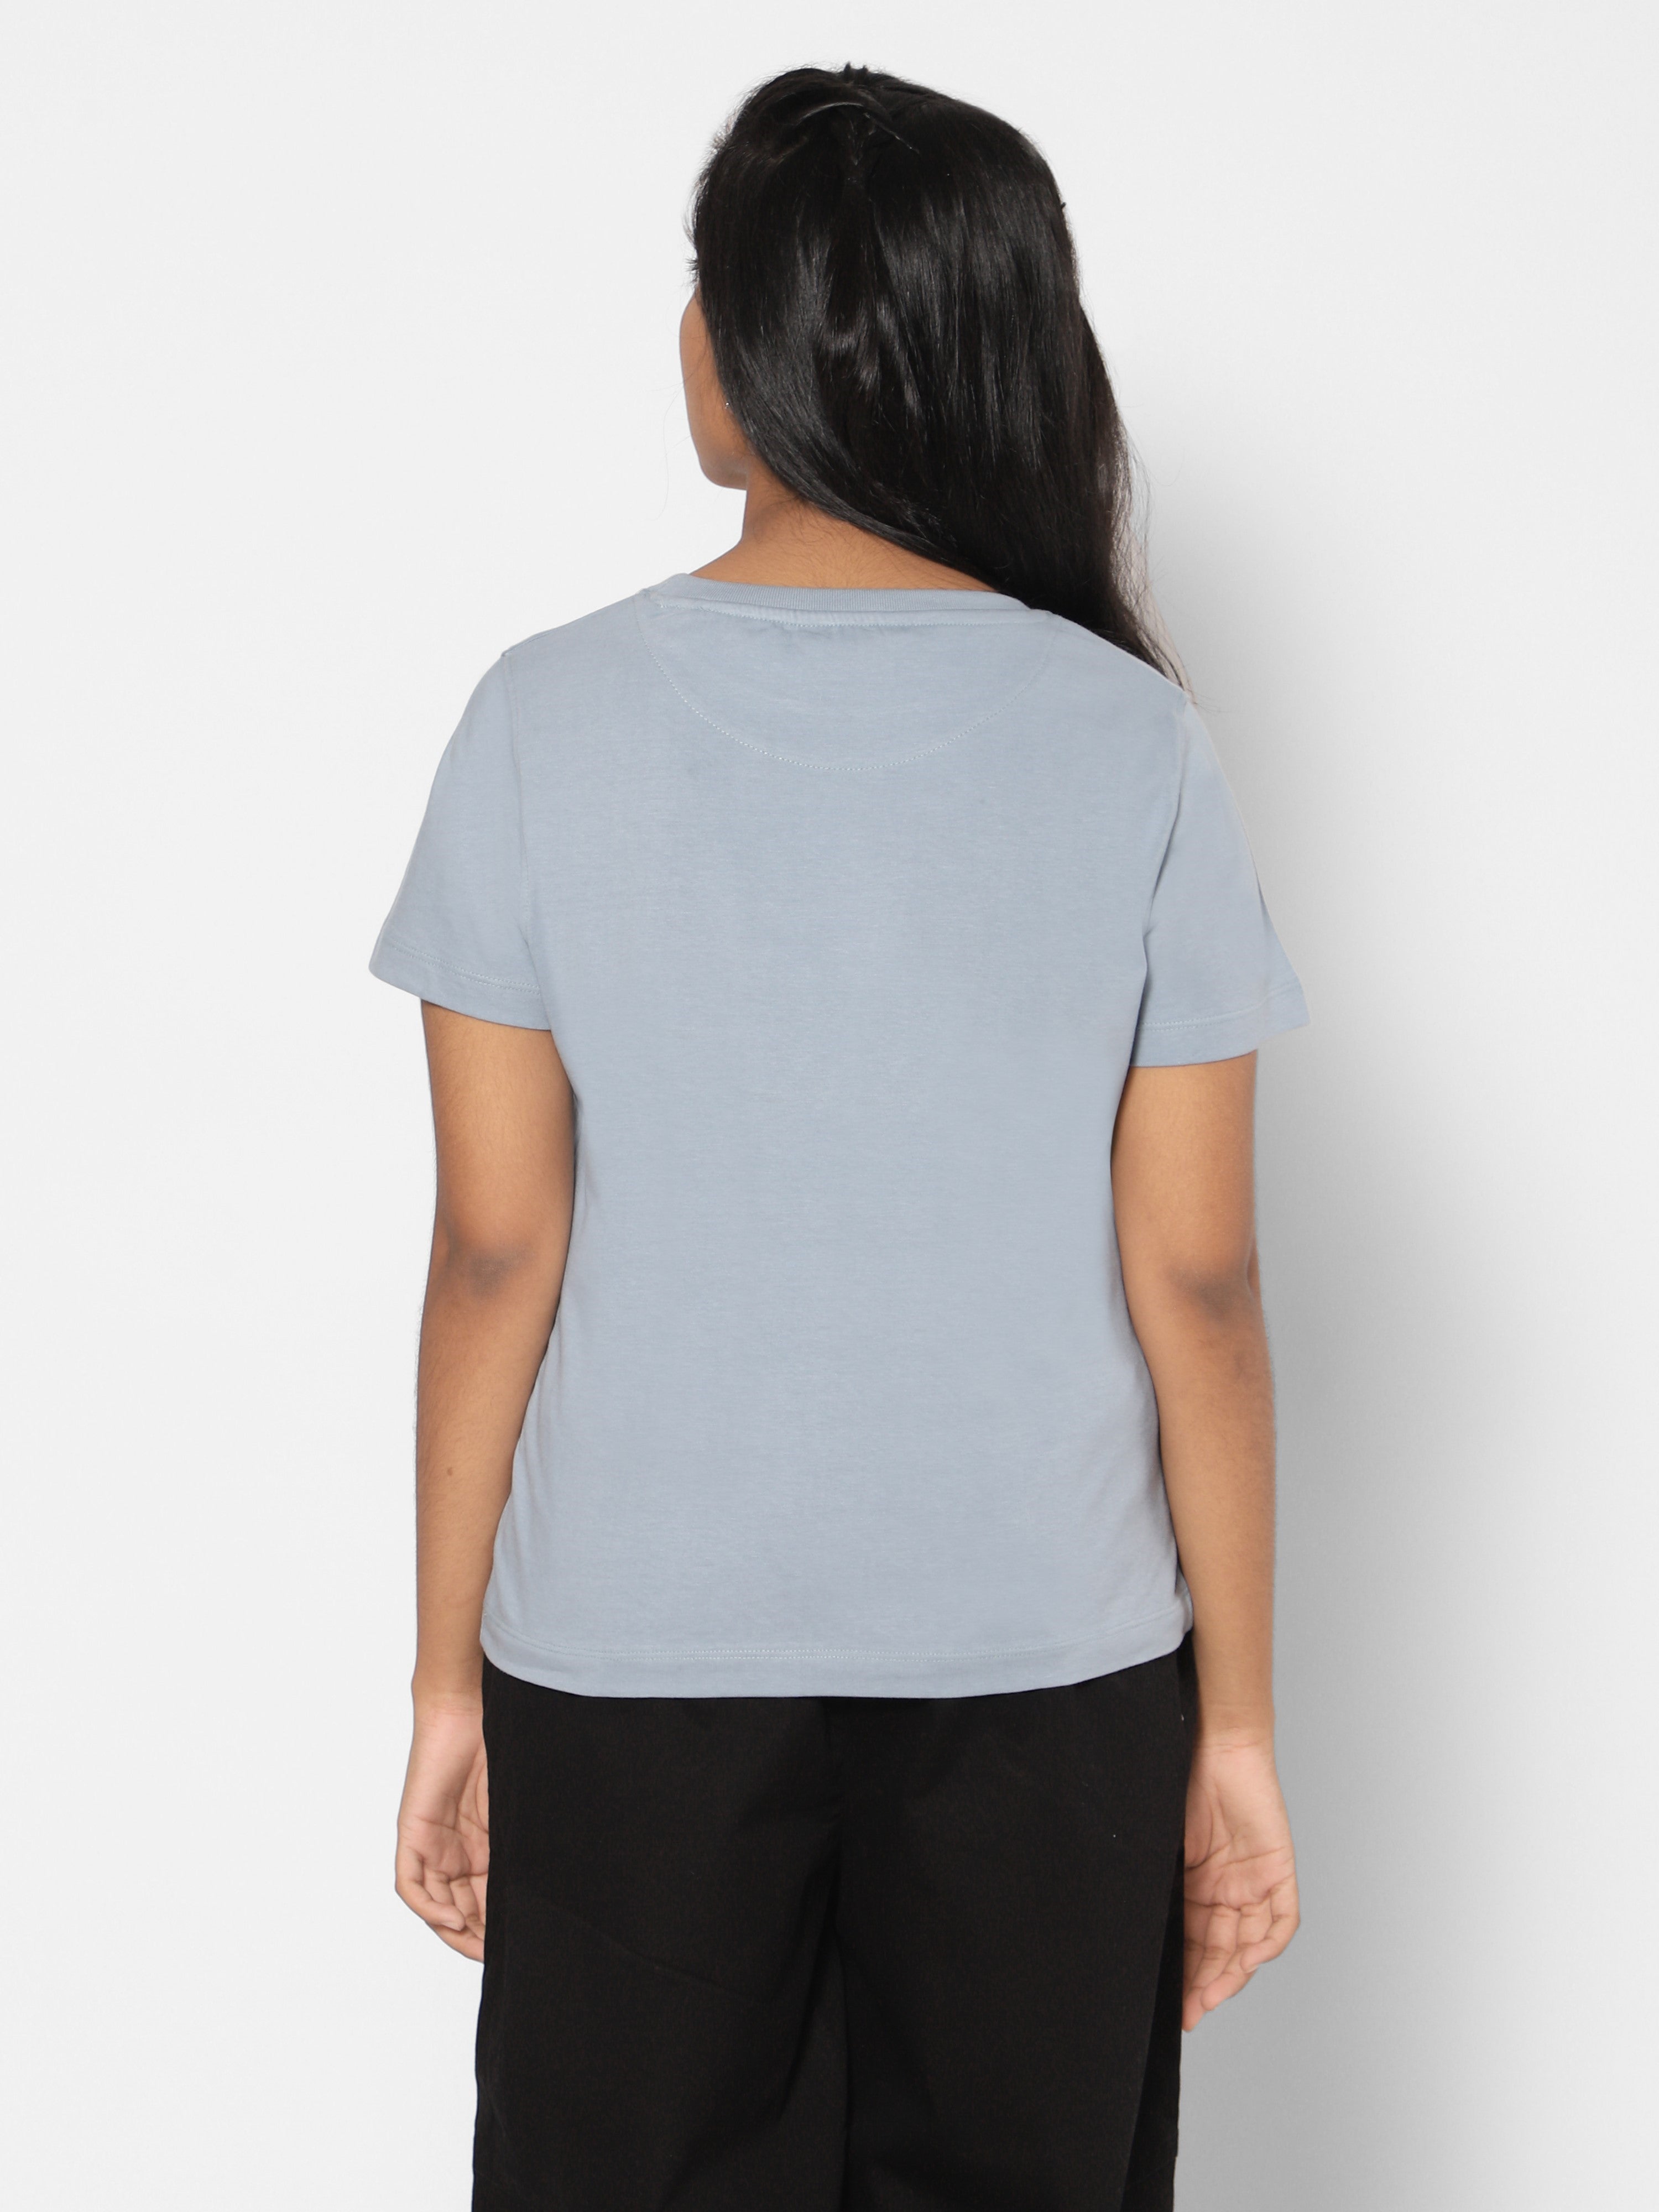 TeenTrums Pack of 3 - Girls Graphic Print Tee 100% Cotton T-Shirt Round Neck Half Sleeves-  Blue/ Black / White